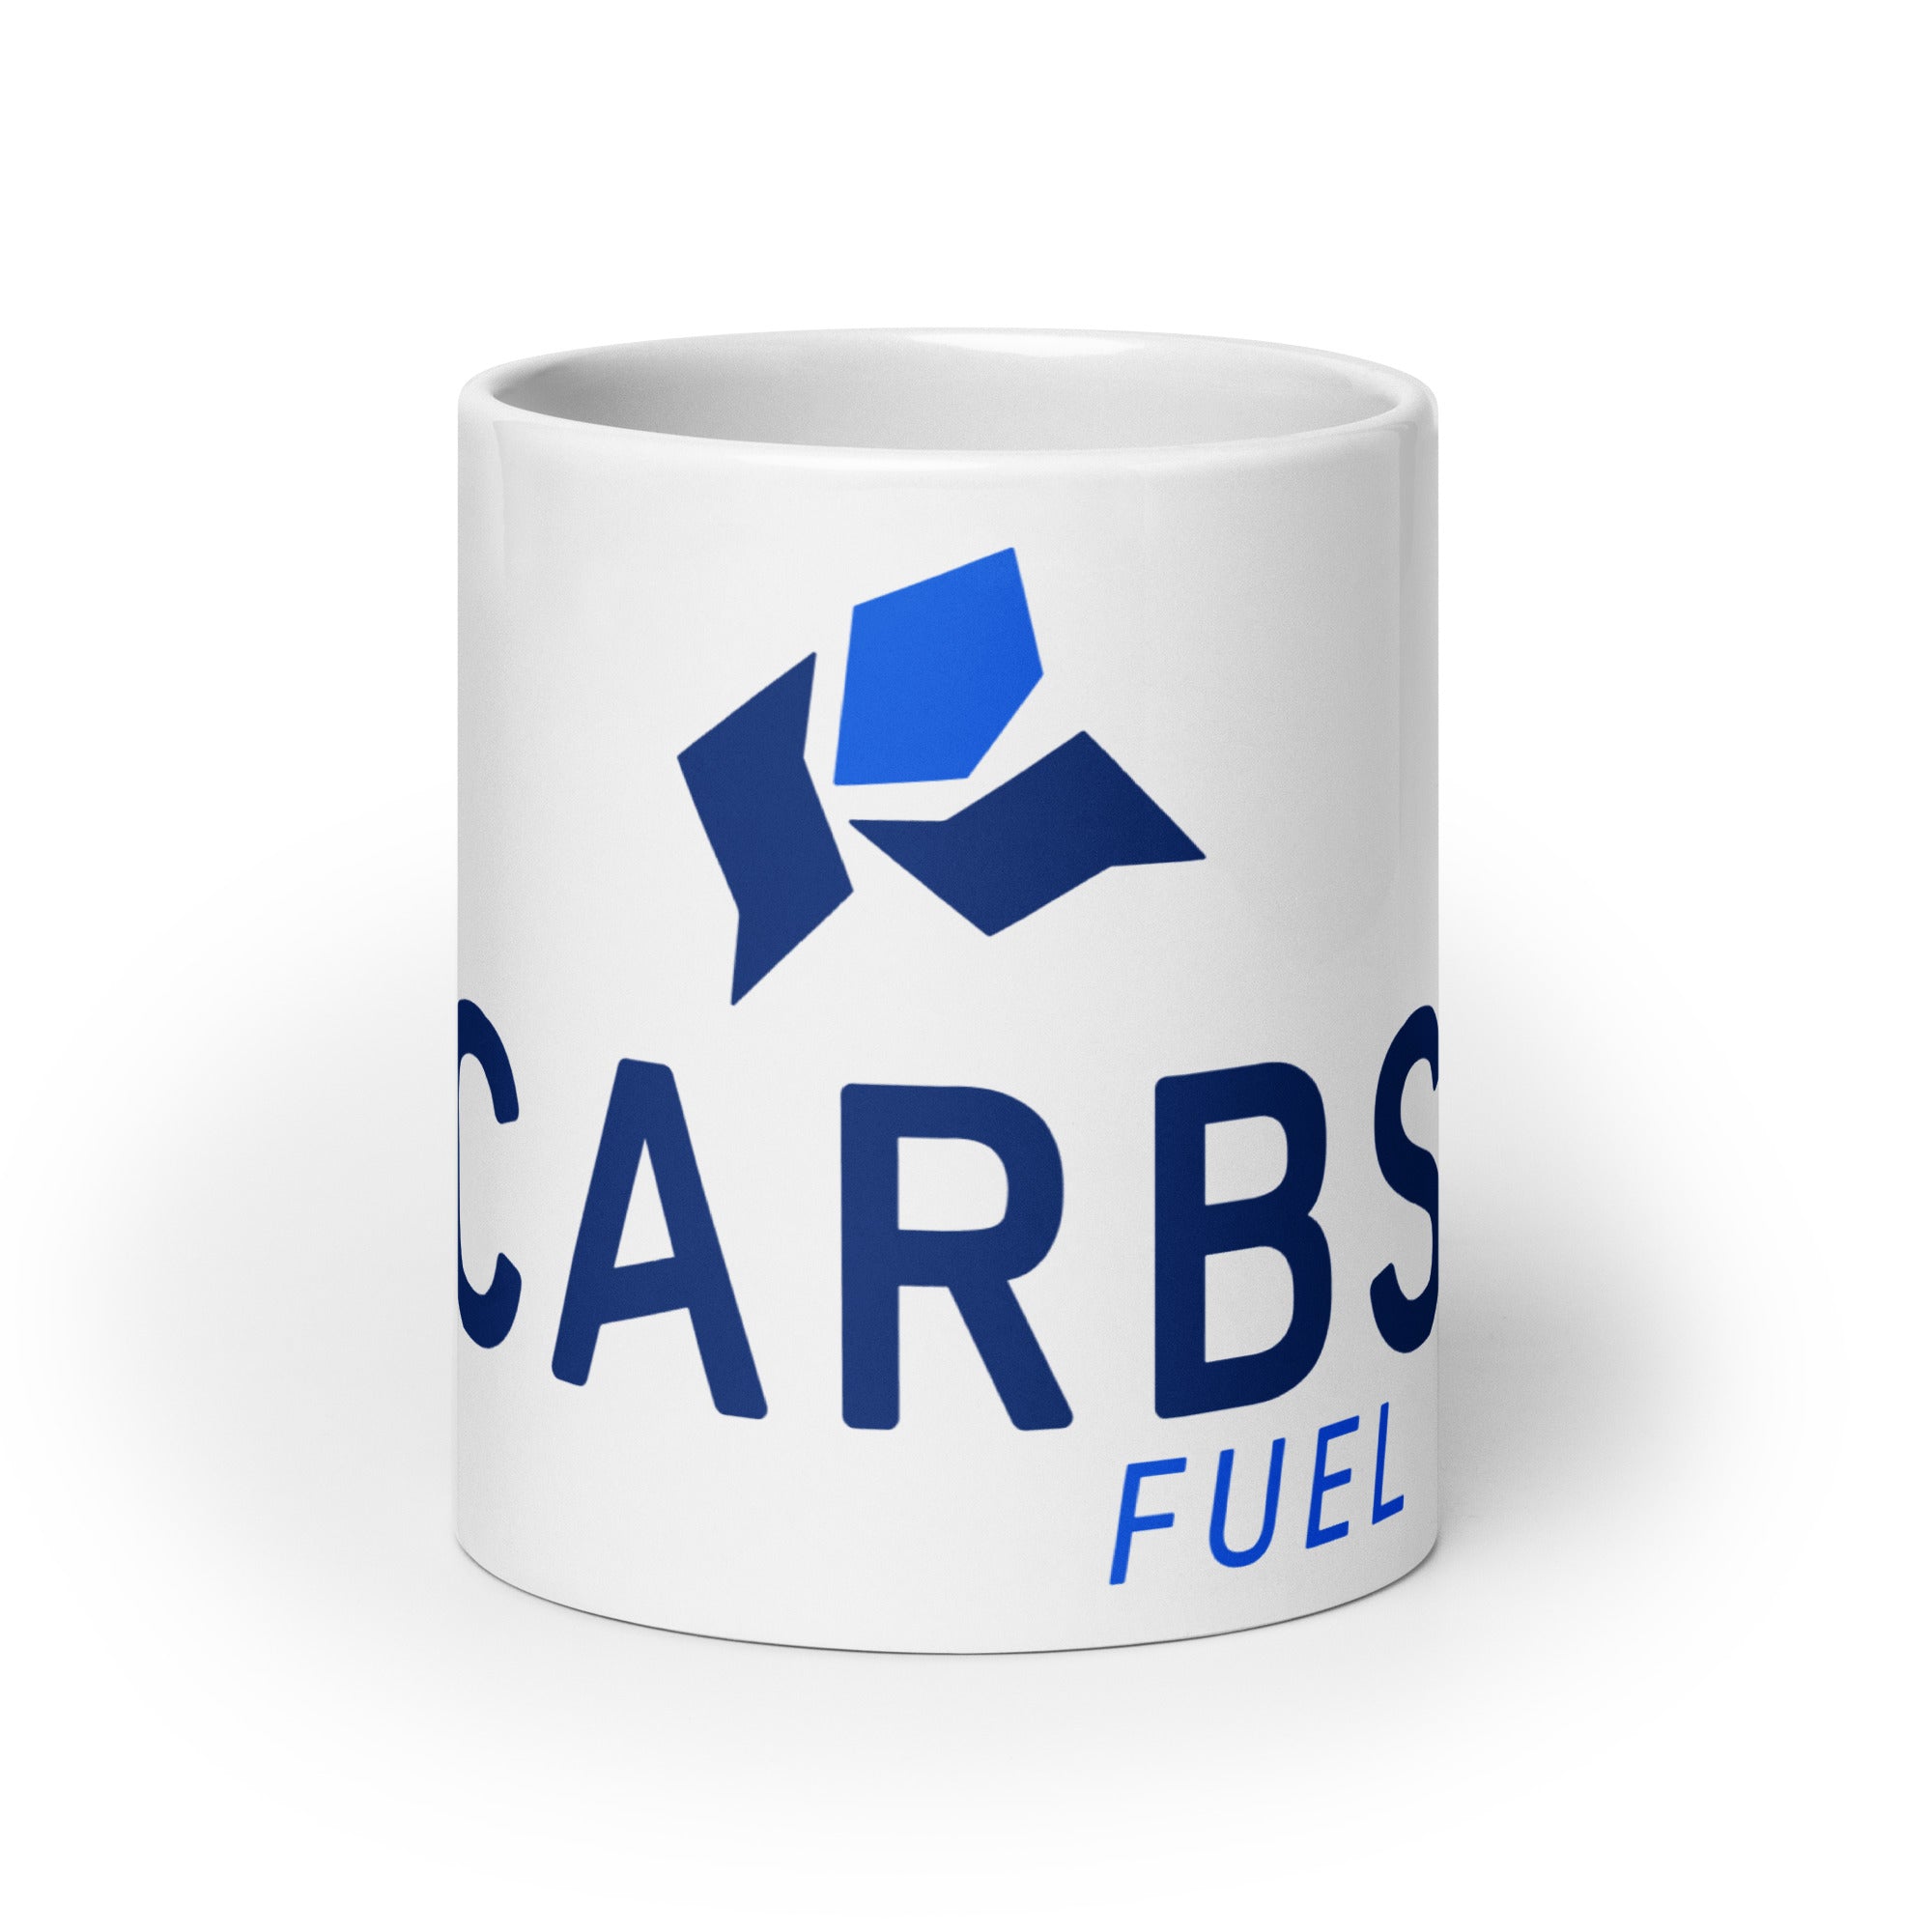 CARBS mug